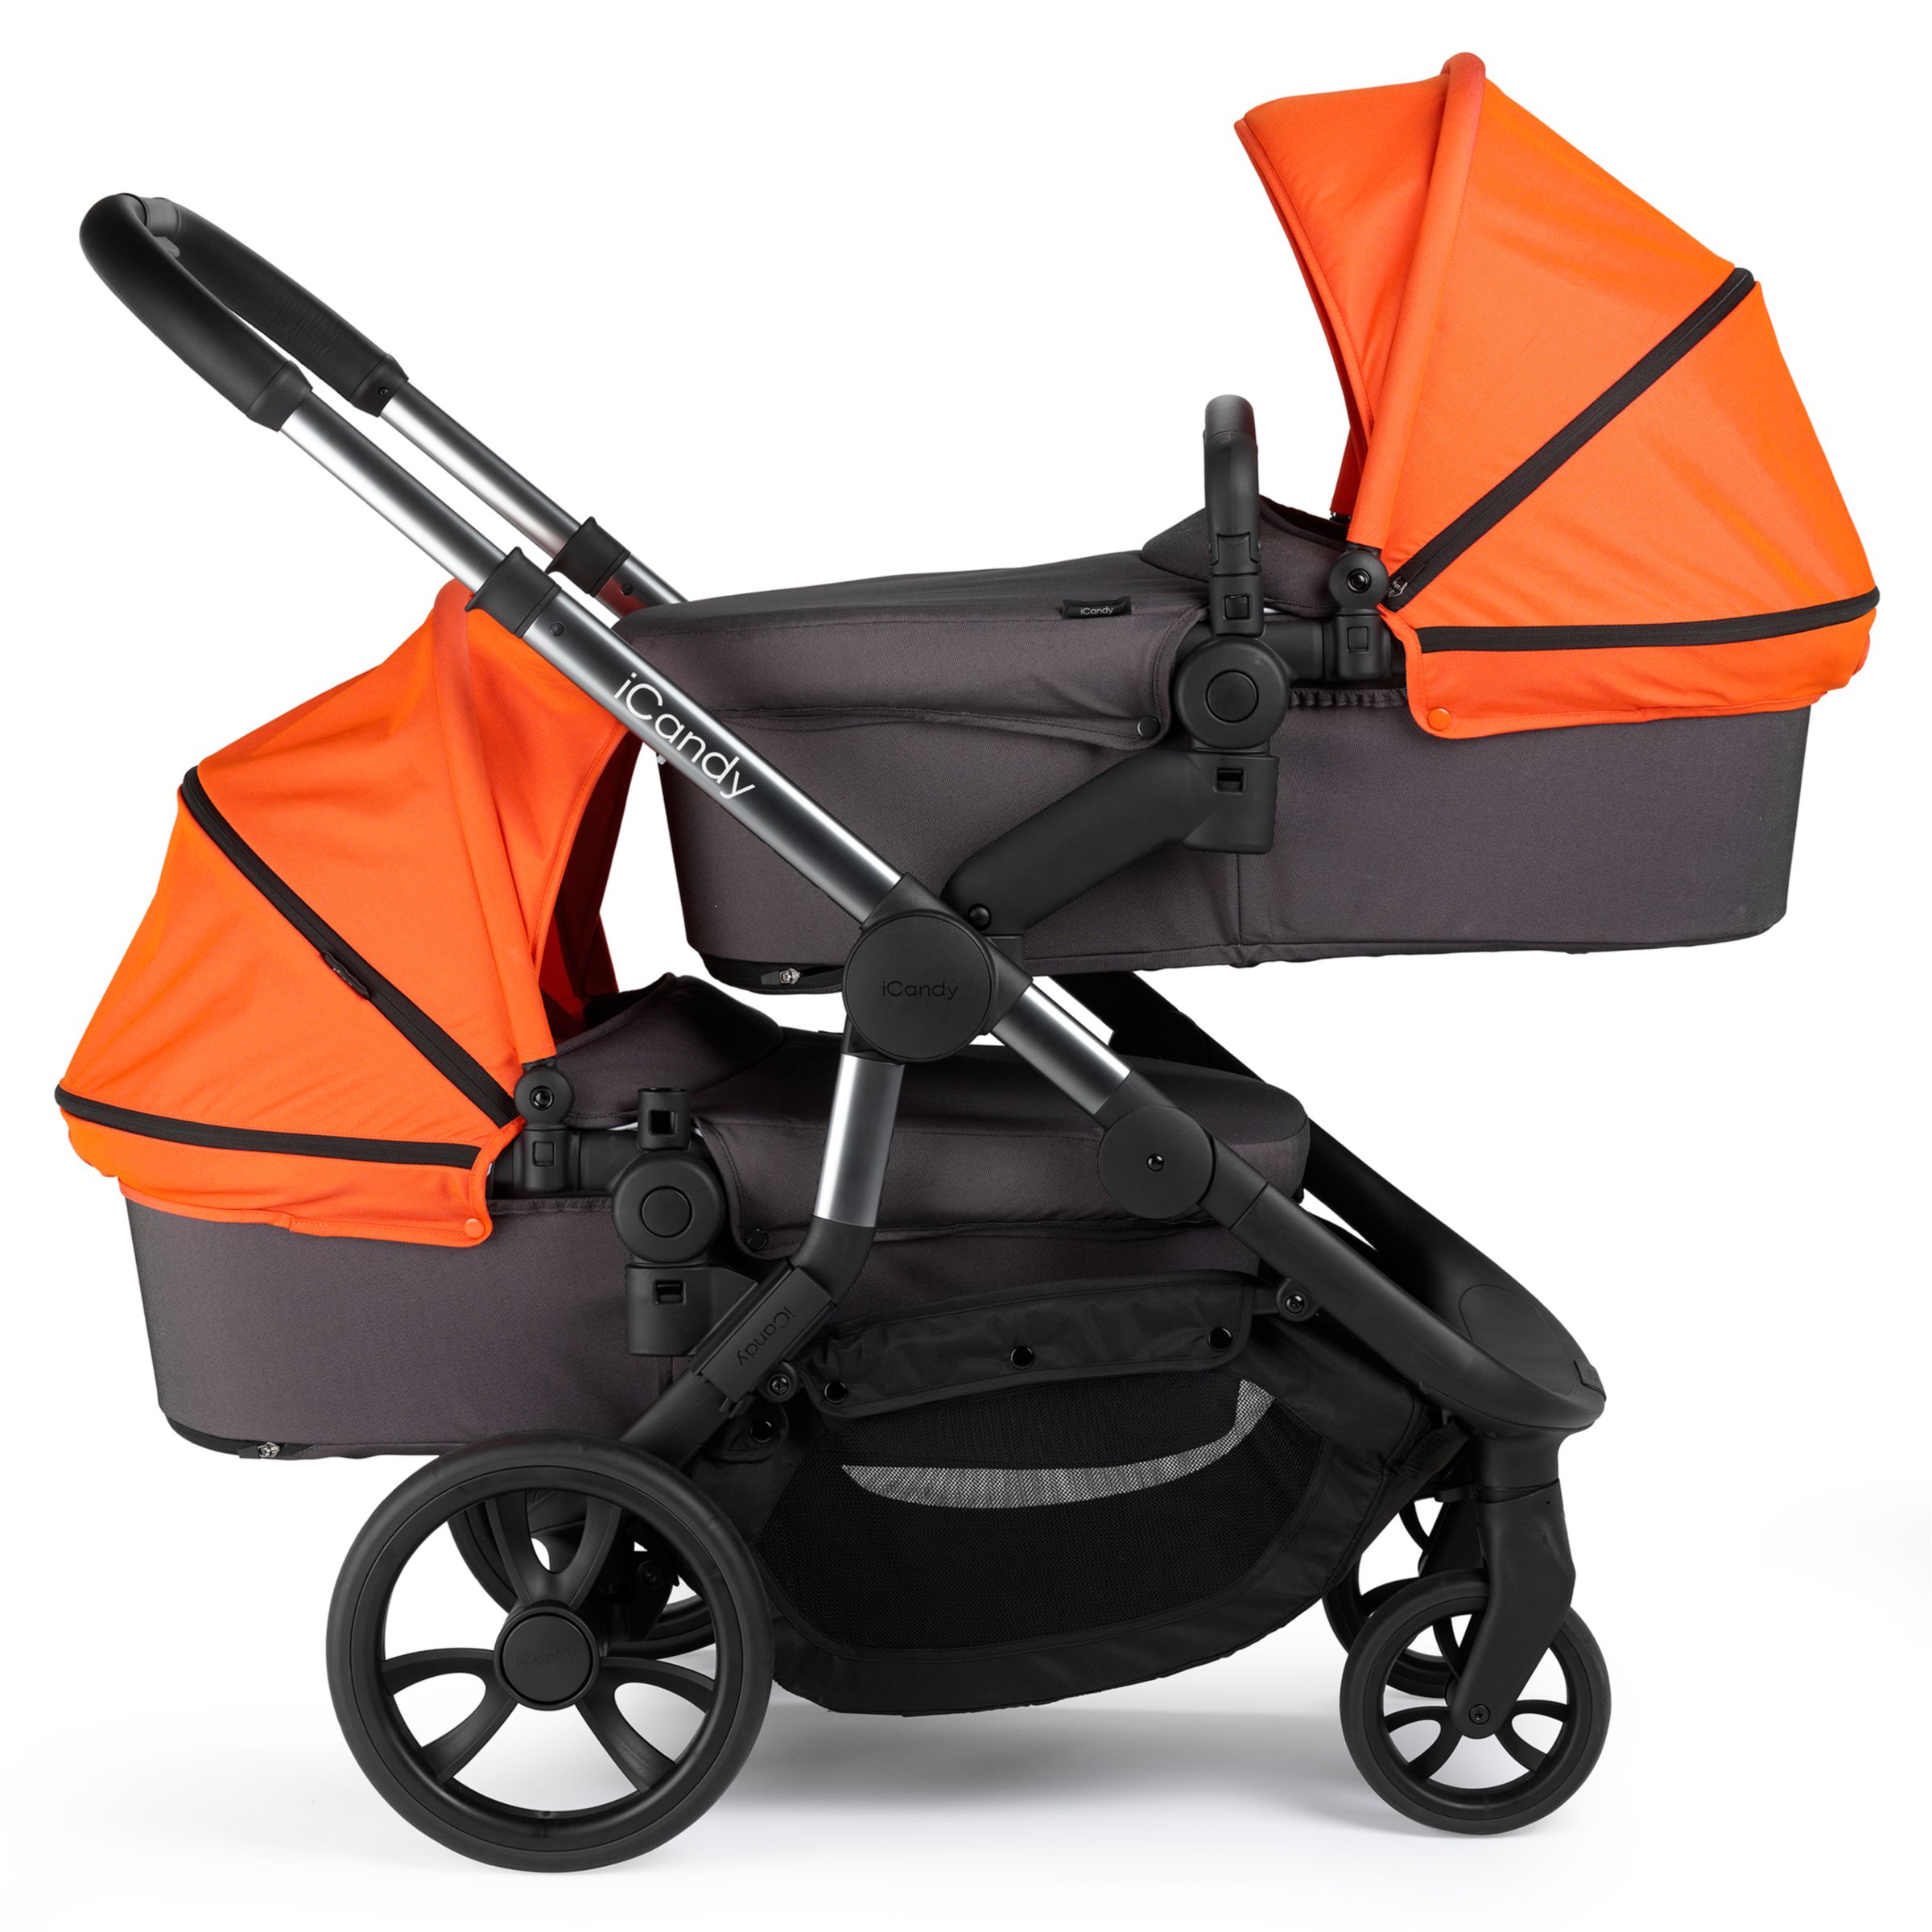 the icandy orange double stroller